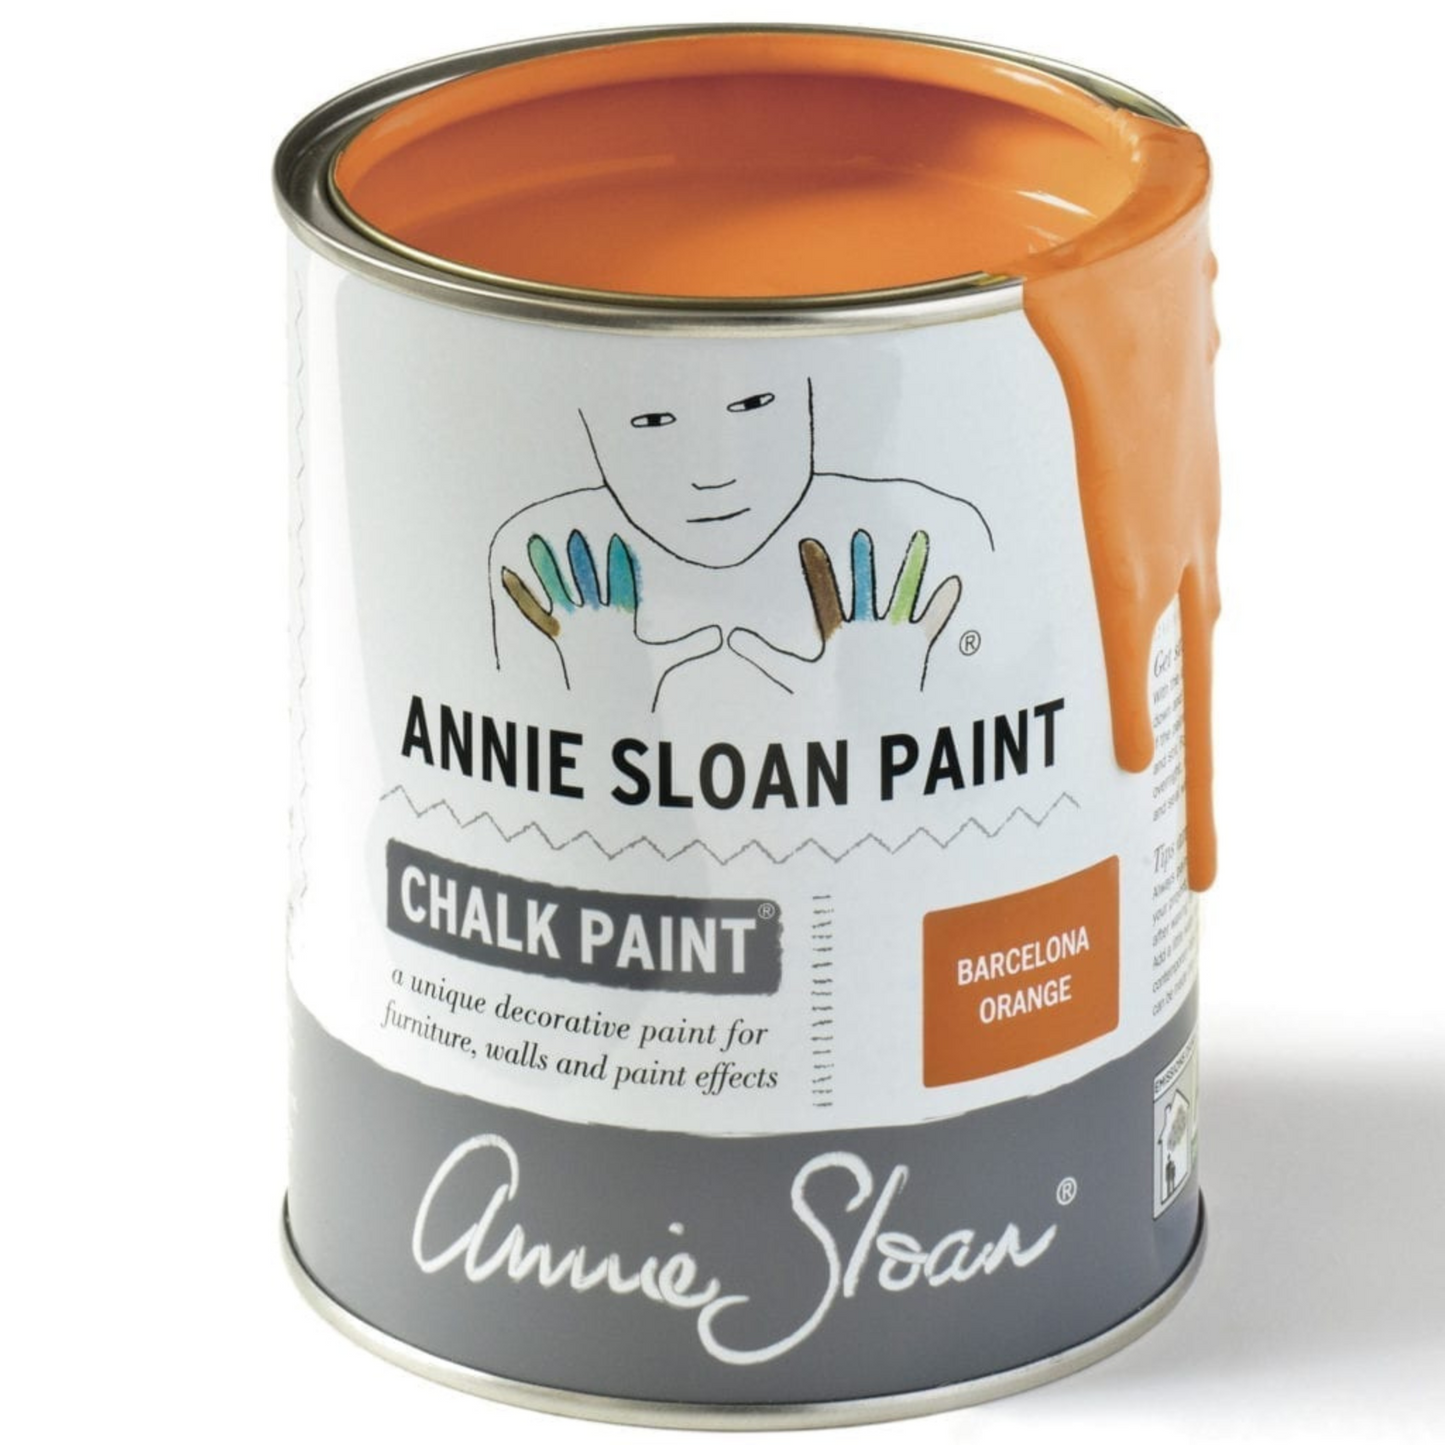 Can of Barcelona Orange Annie Sloan chalk paint.